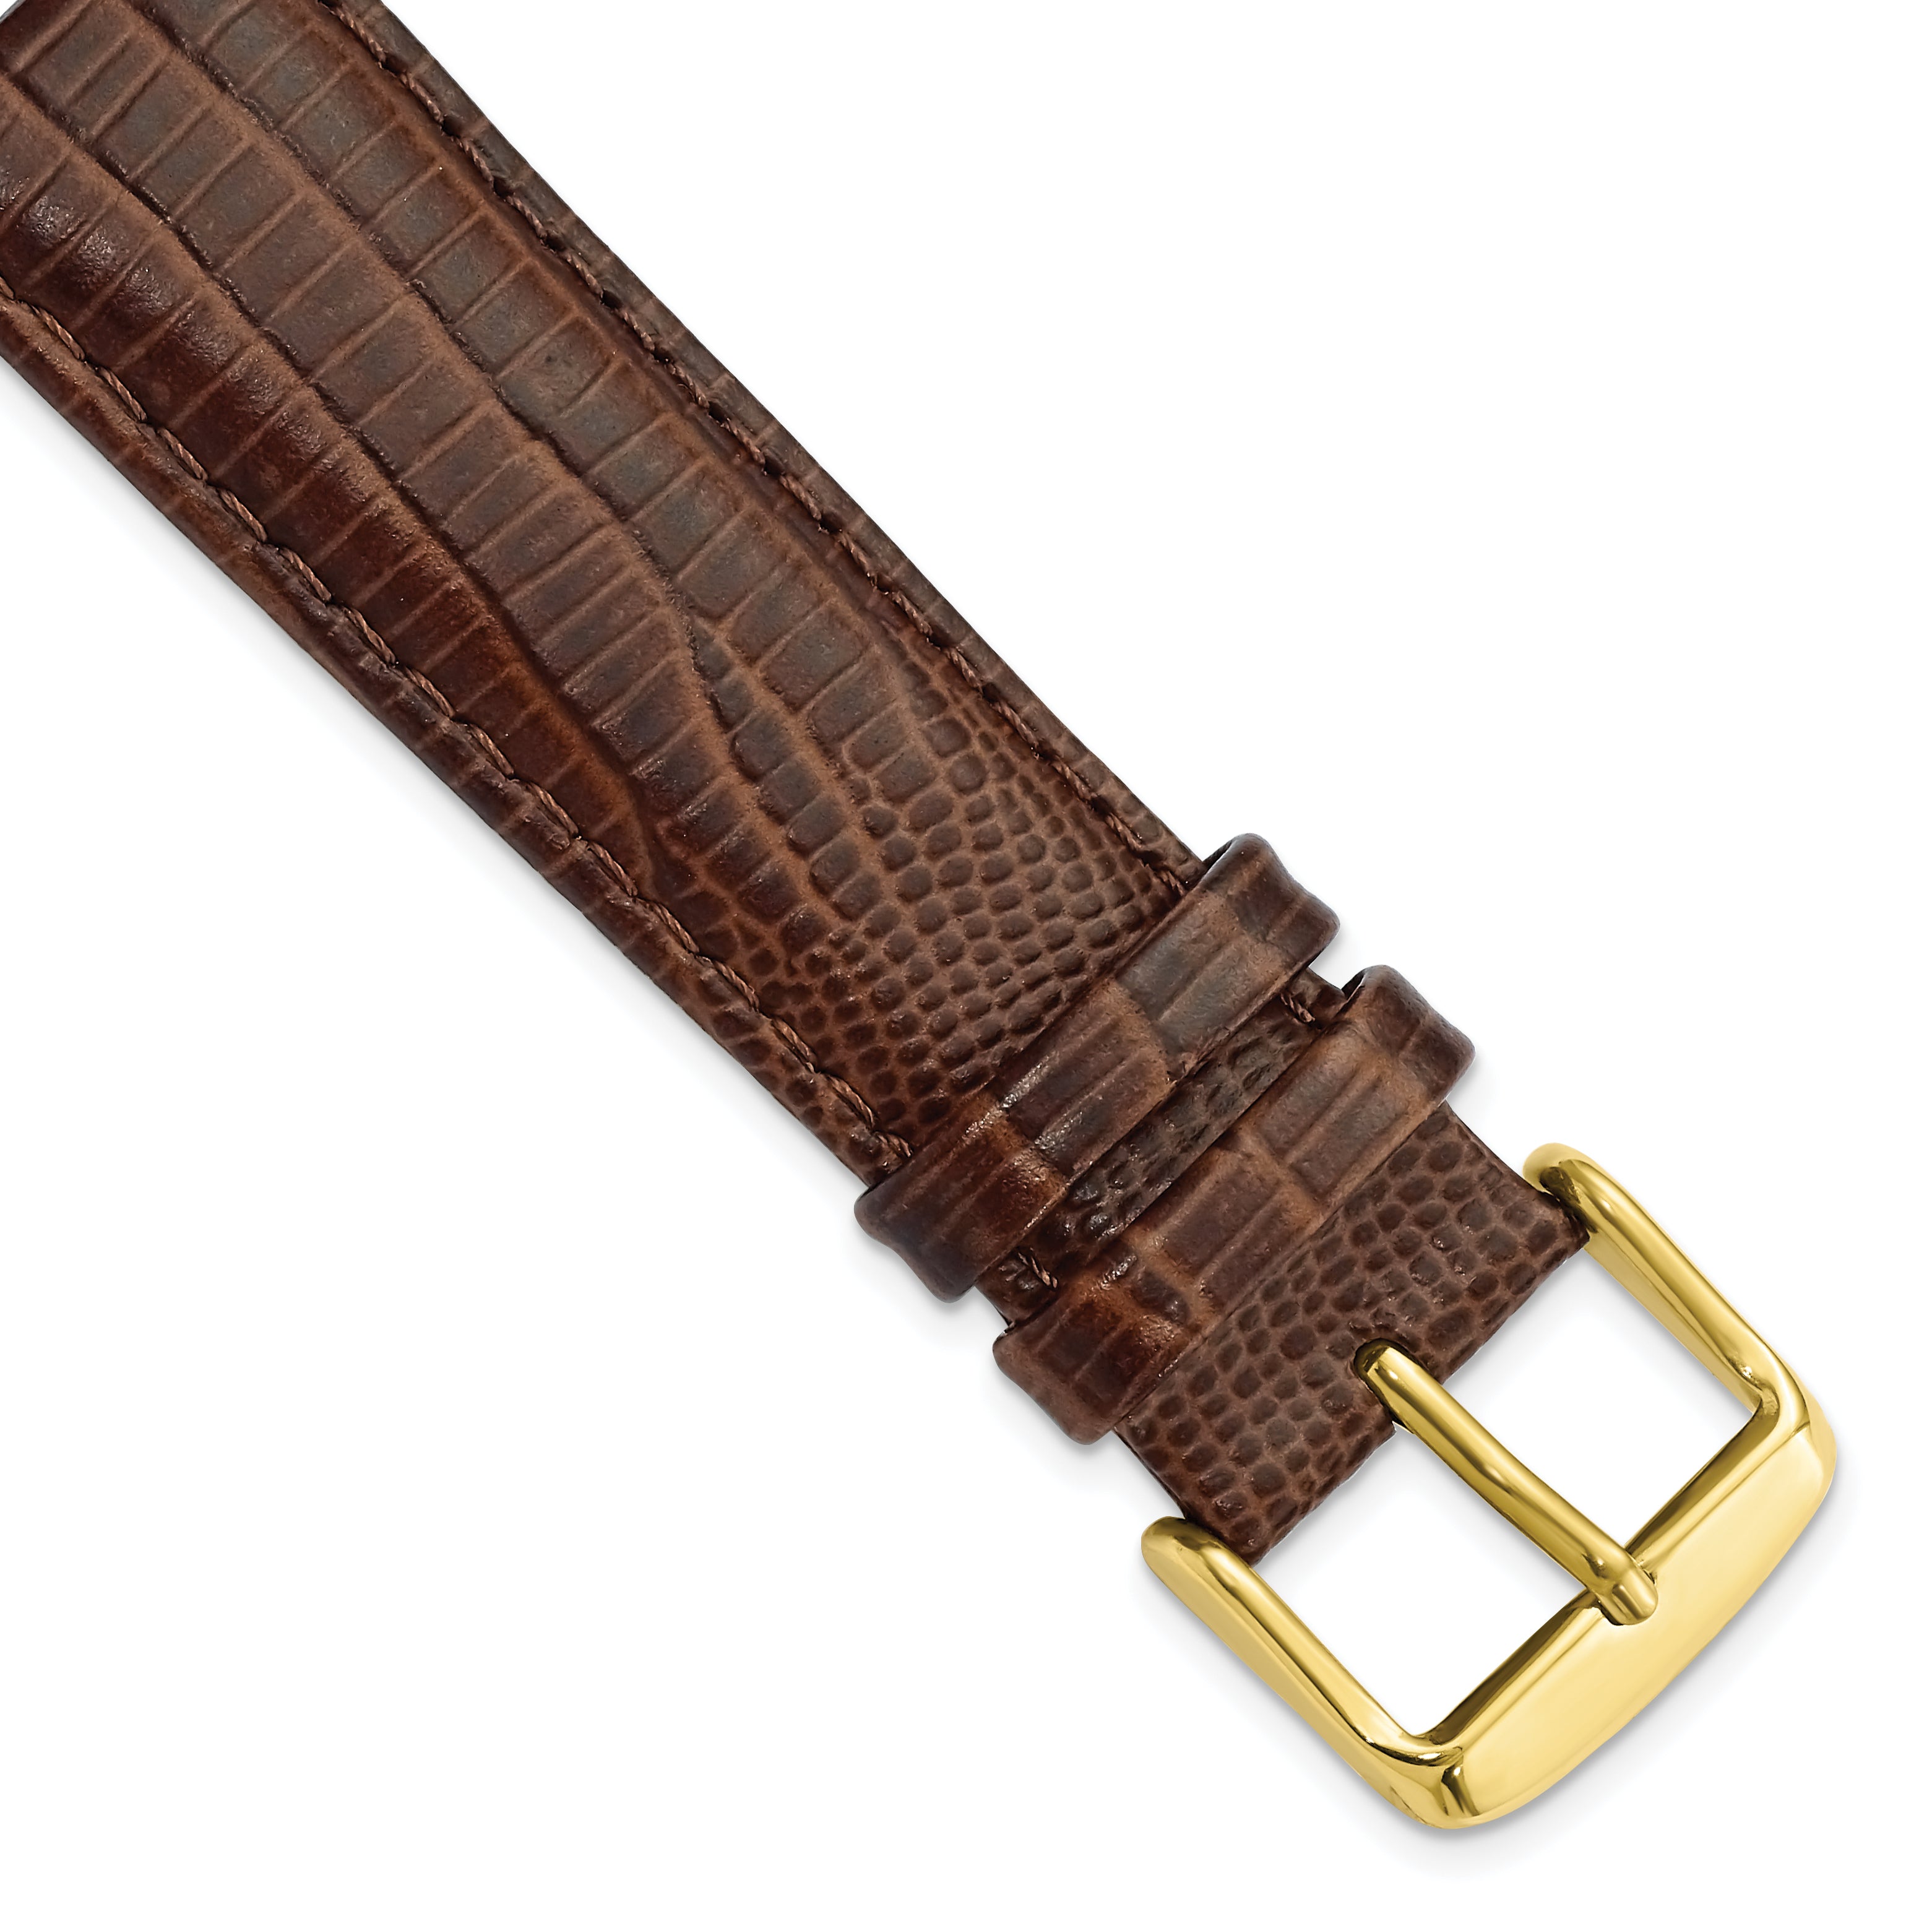 DeBeer 20mm Havana Teju Liz Grain Leather with Gold-tone Buckle 7.5 inch Watch Band